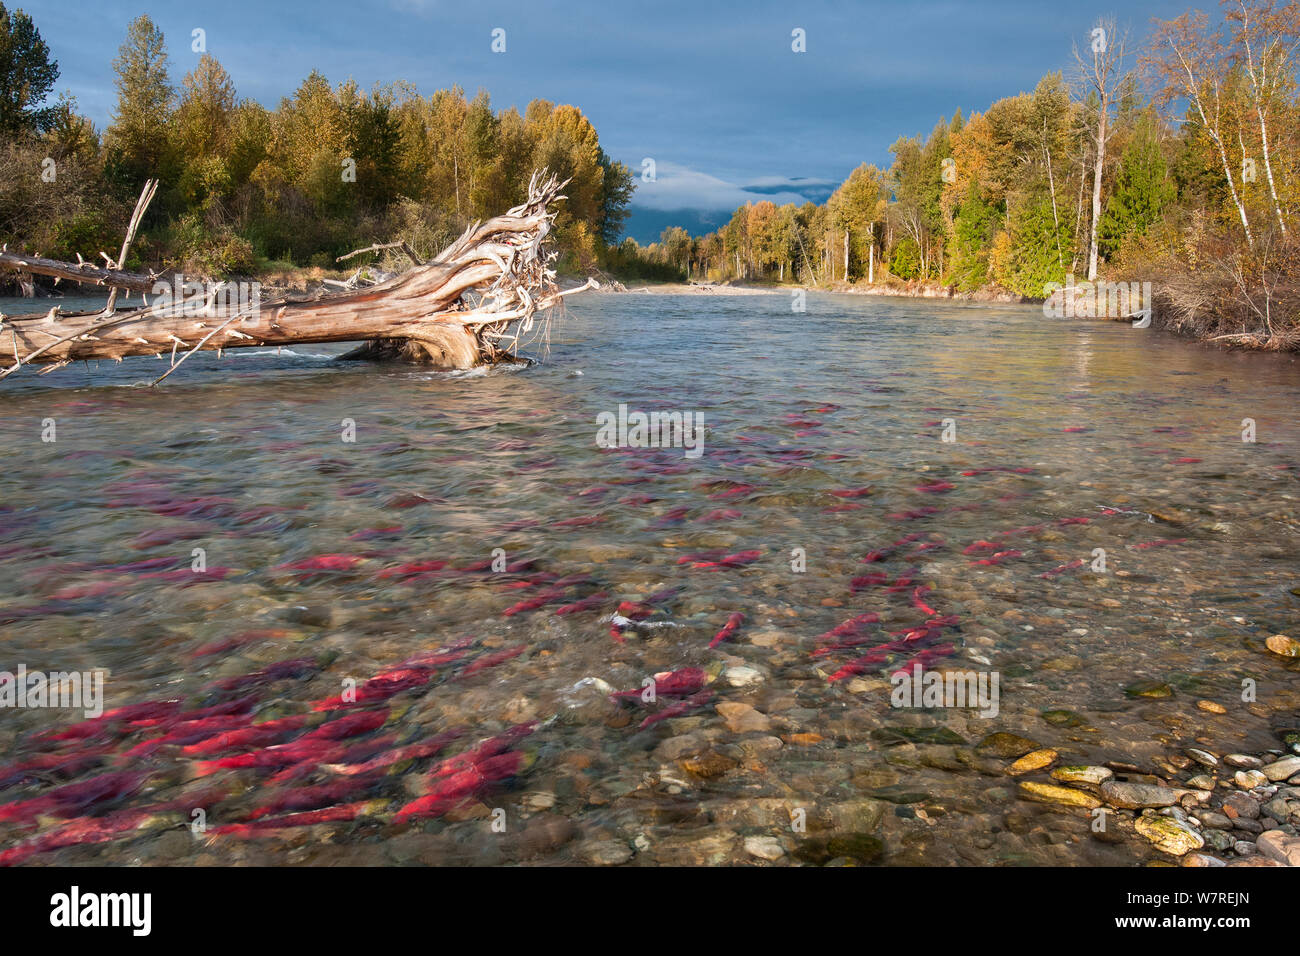 Sockeye salmon (Oncorhynchus nerka) migrating upstream in their spawning river. Adams River, British Columbia, Canada, October. Stock Photo